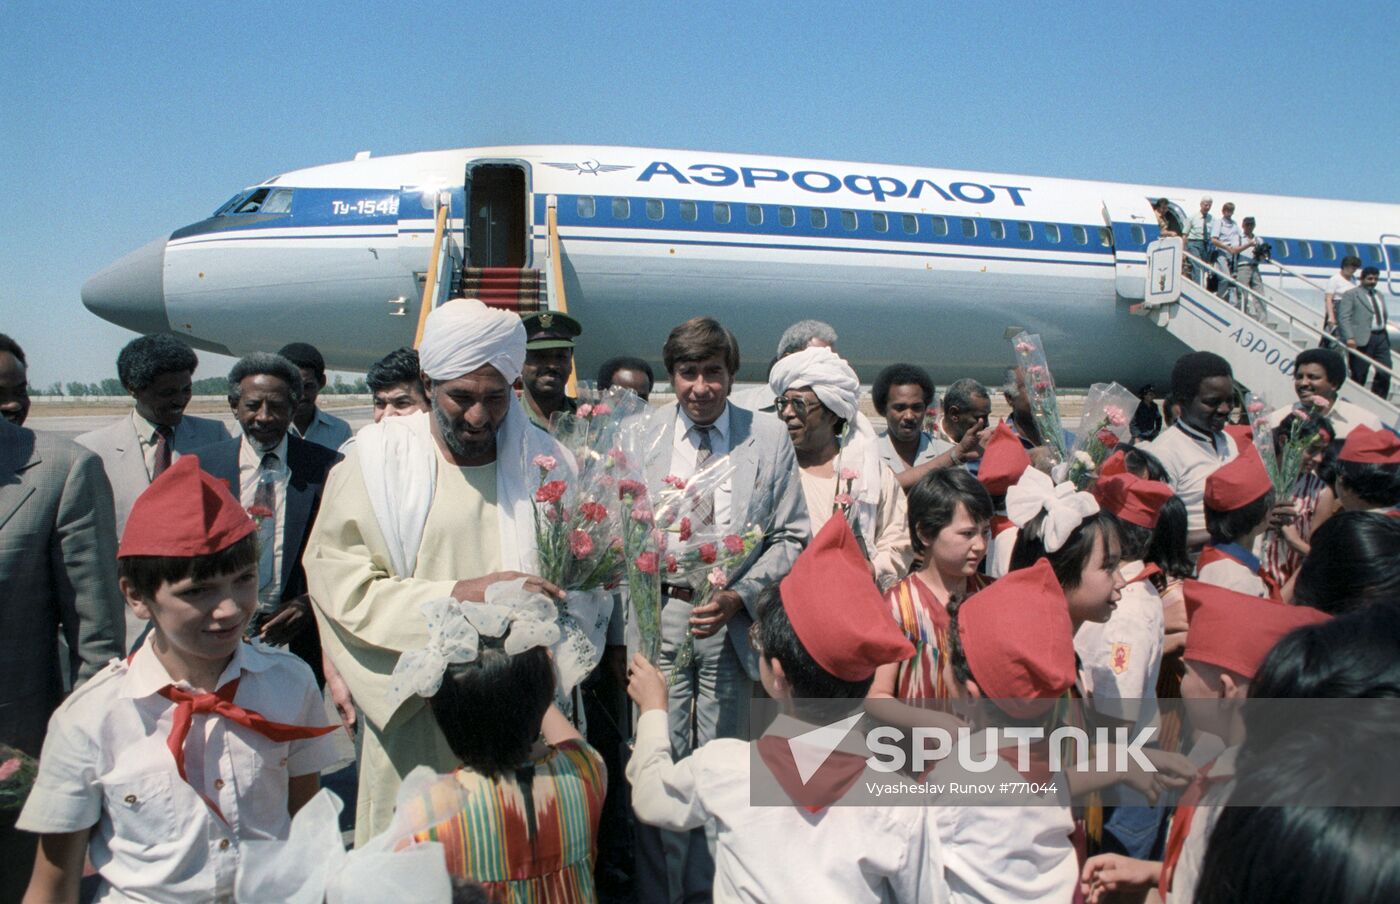 Sadiq al-Mahdi greeted at airport